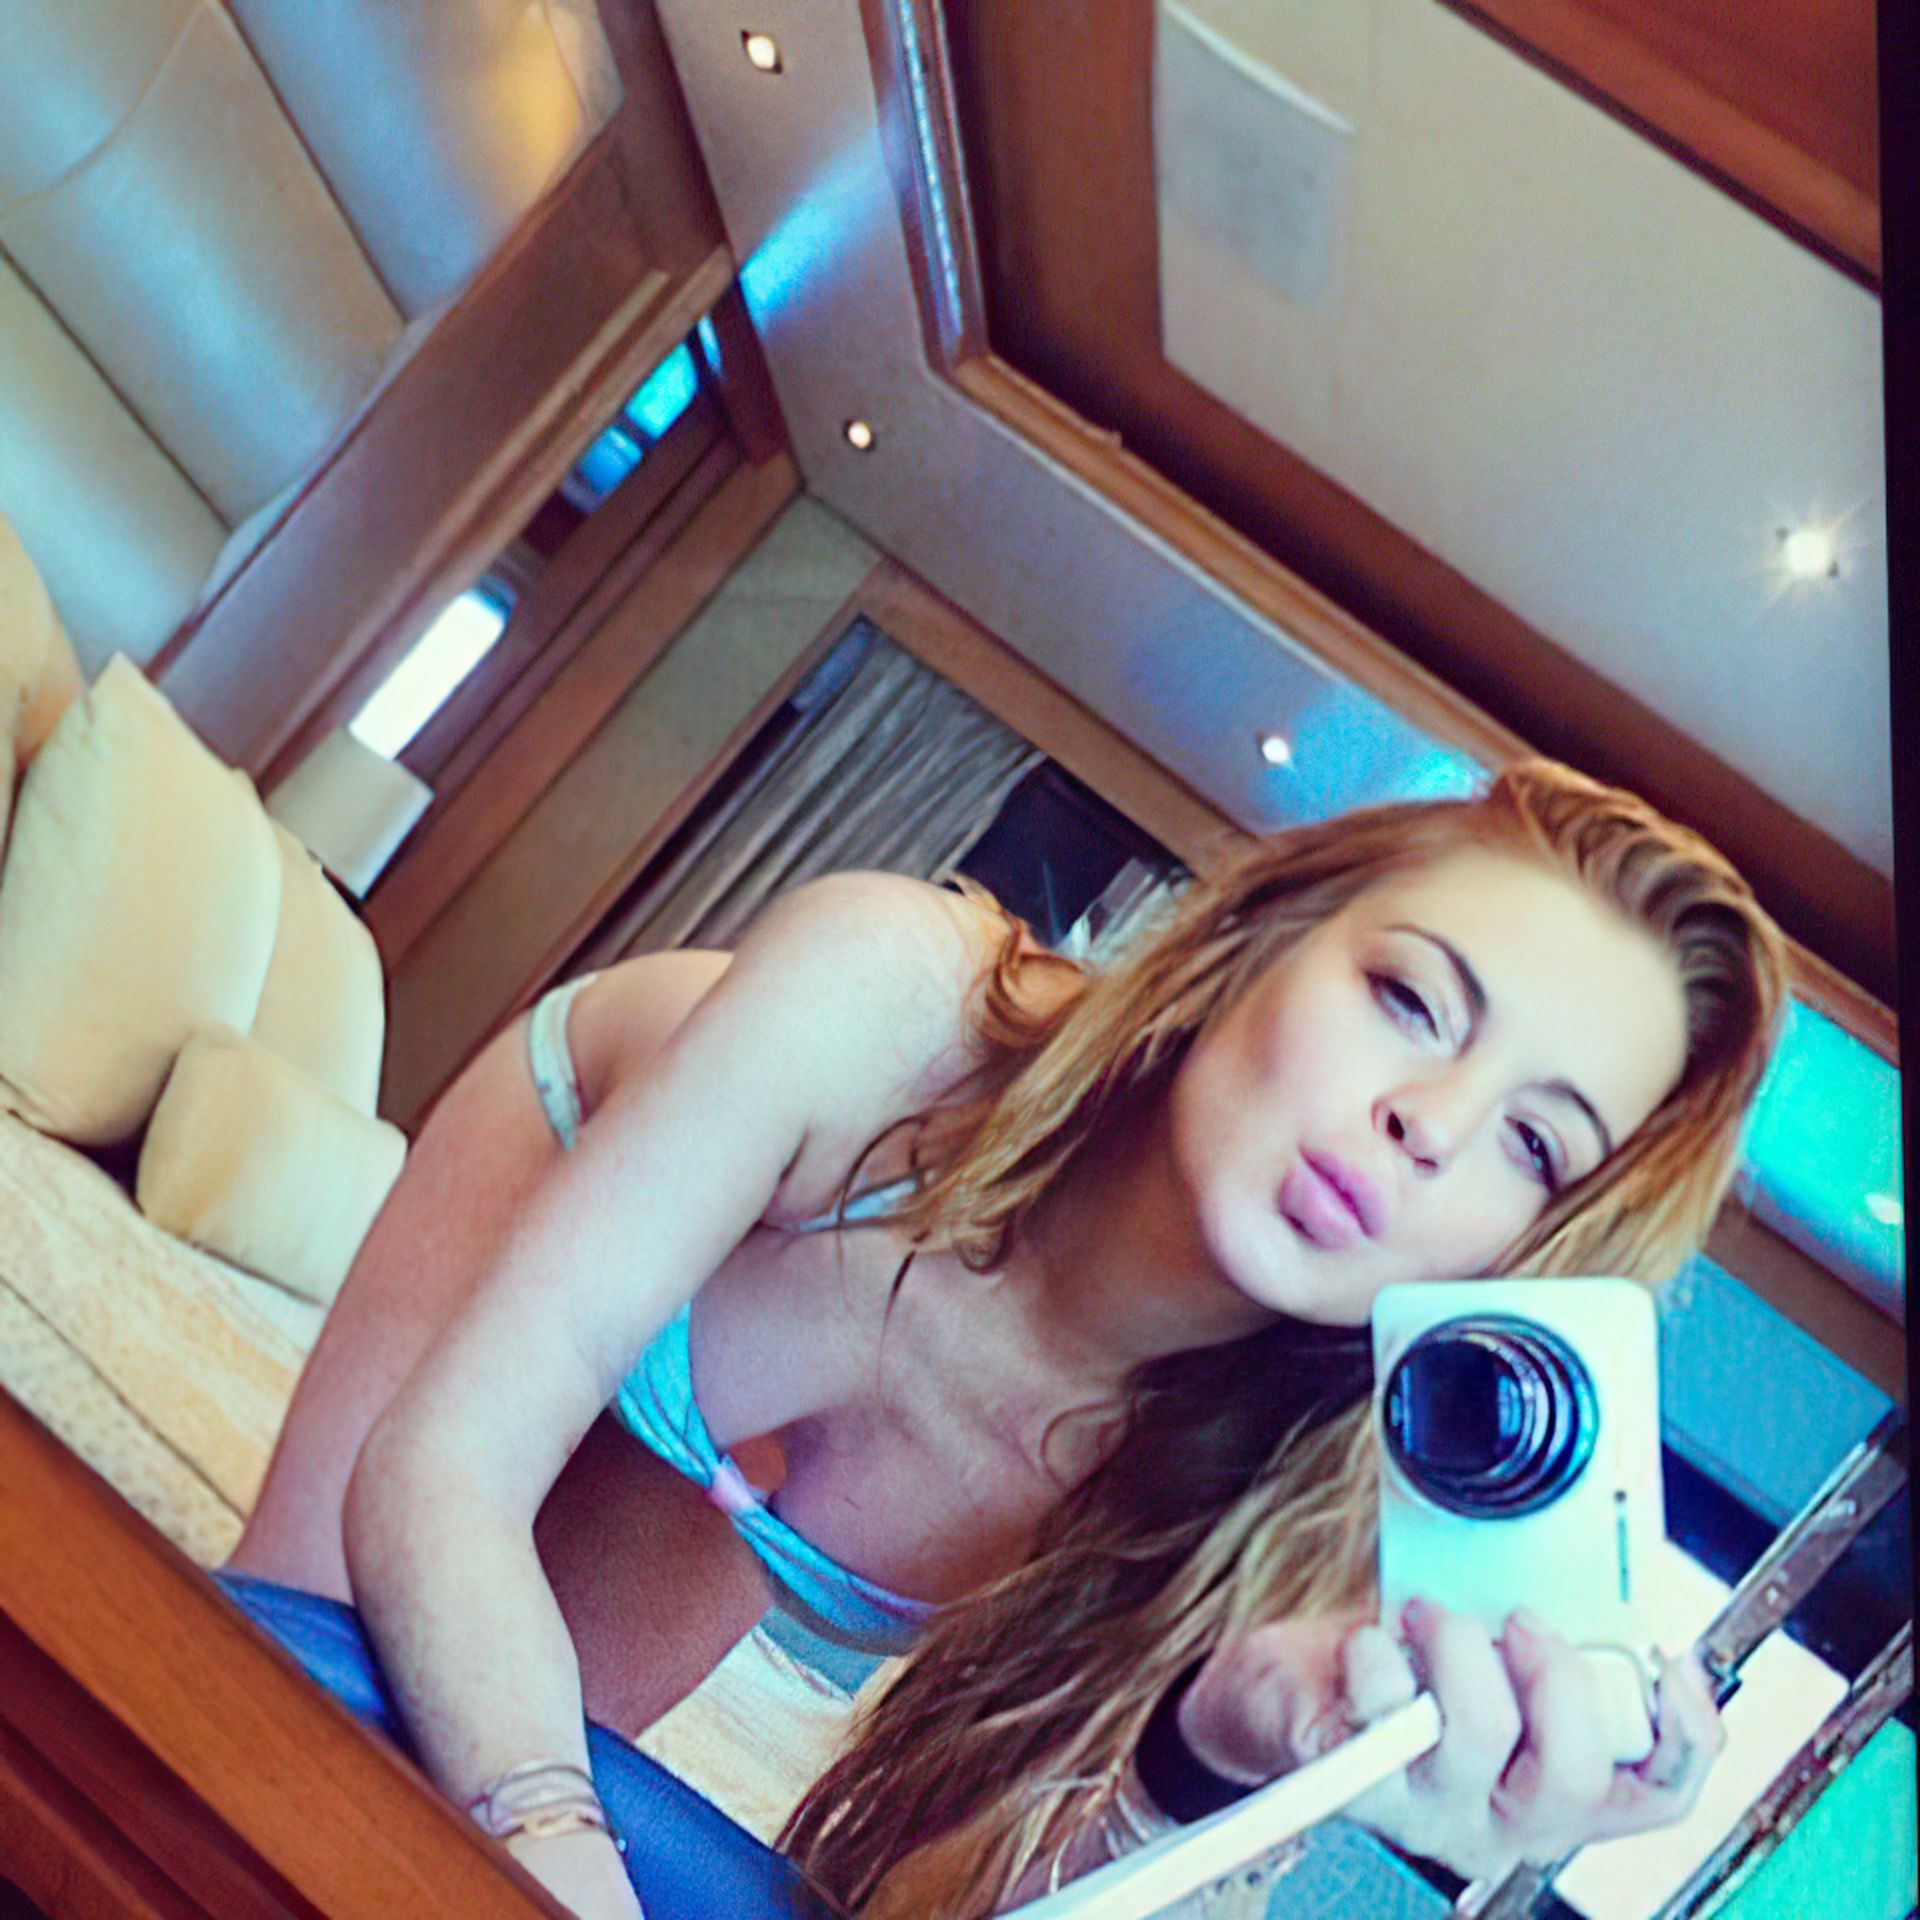 Leaked pictures lohan lindsay Lindsay Lohan